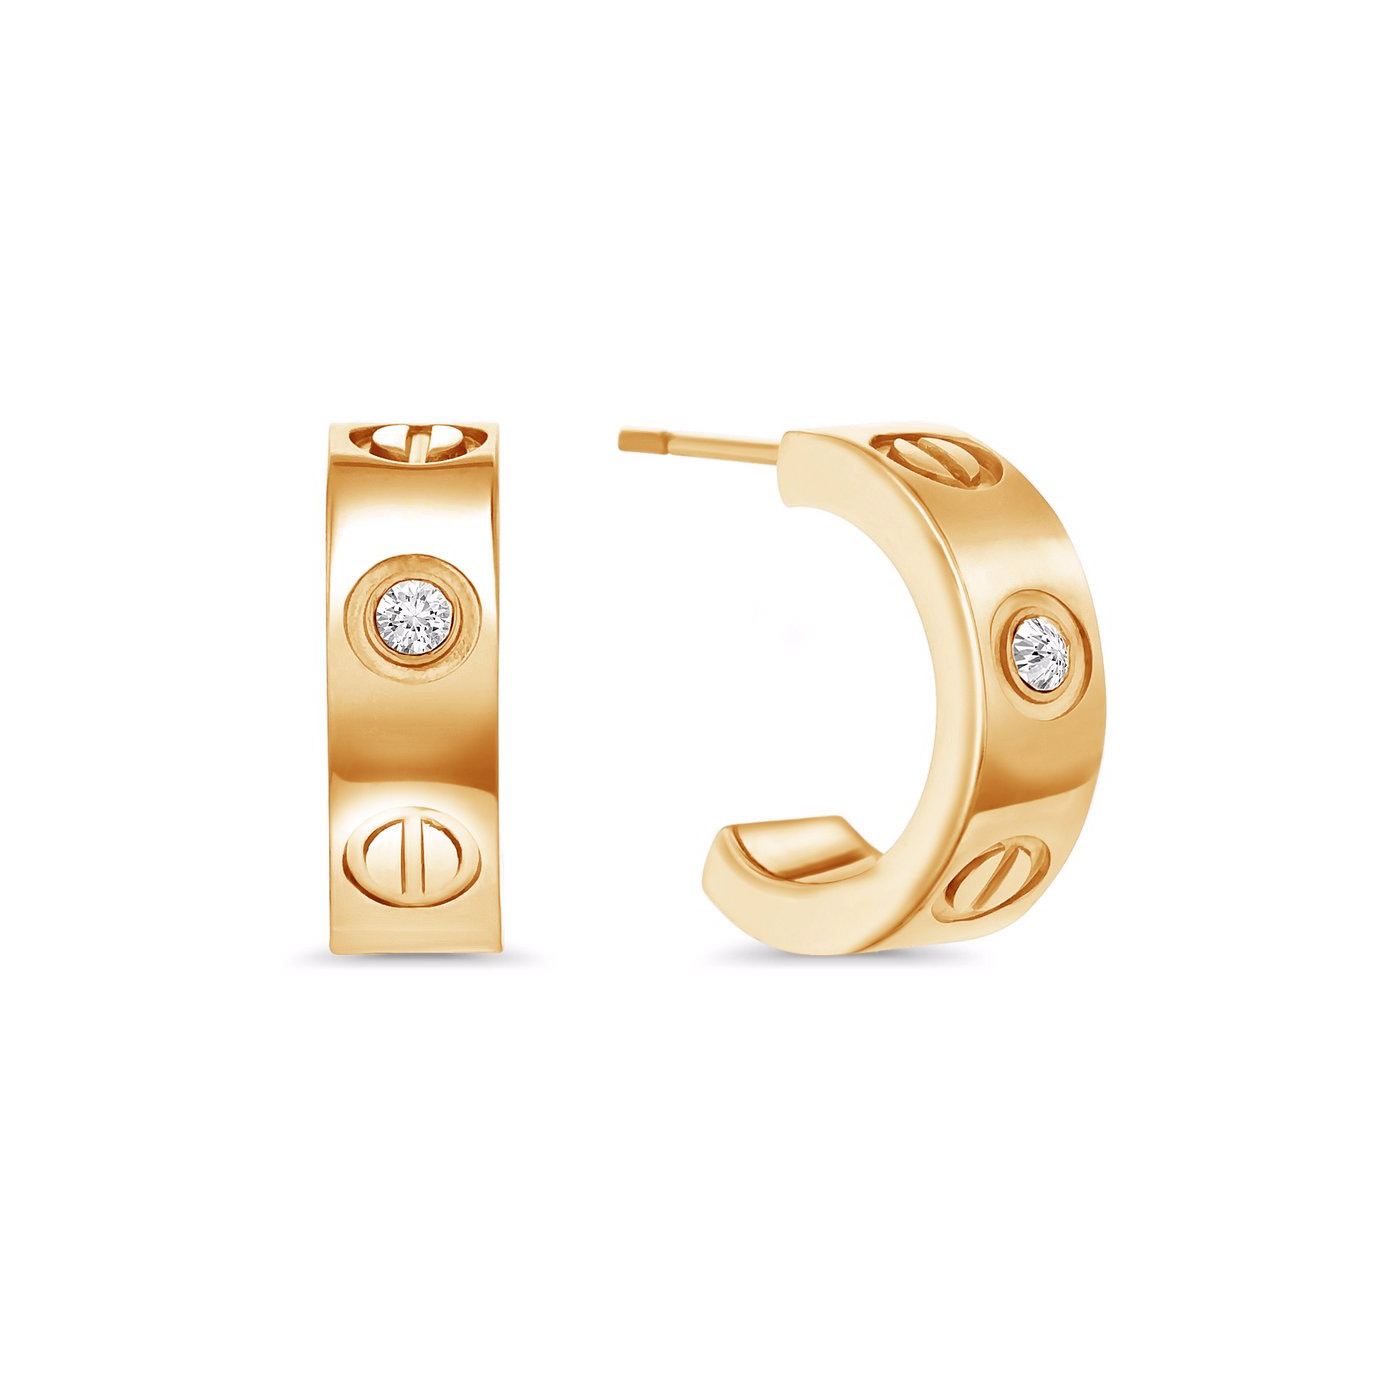 Custom Engraved Jewelry Earrings Yellow Gold OEM/ODM Jewelry plated half hoops